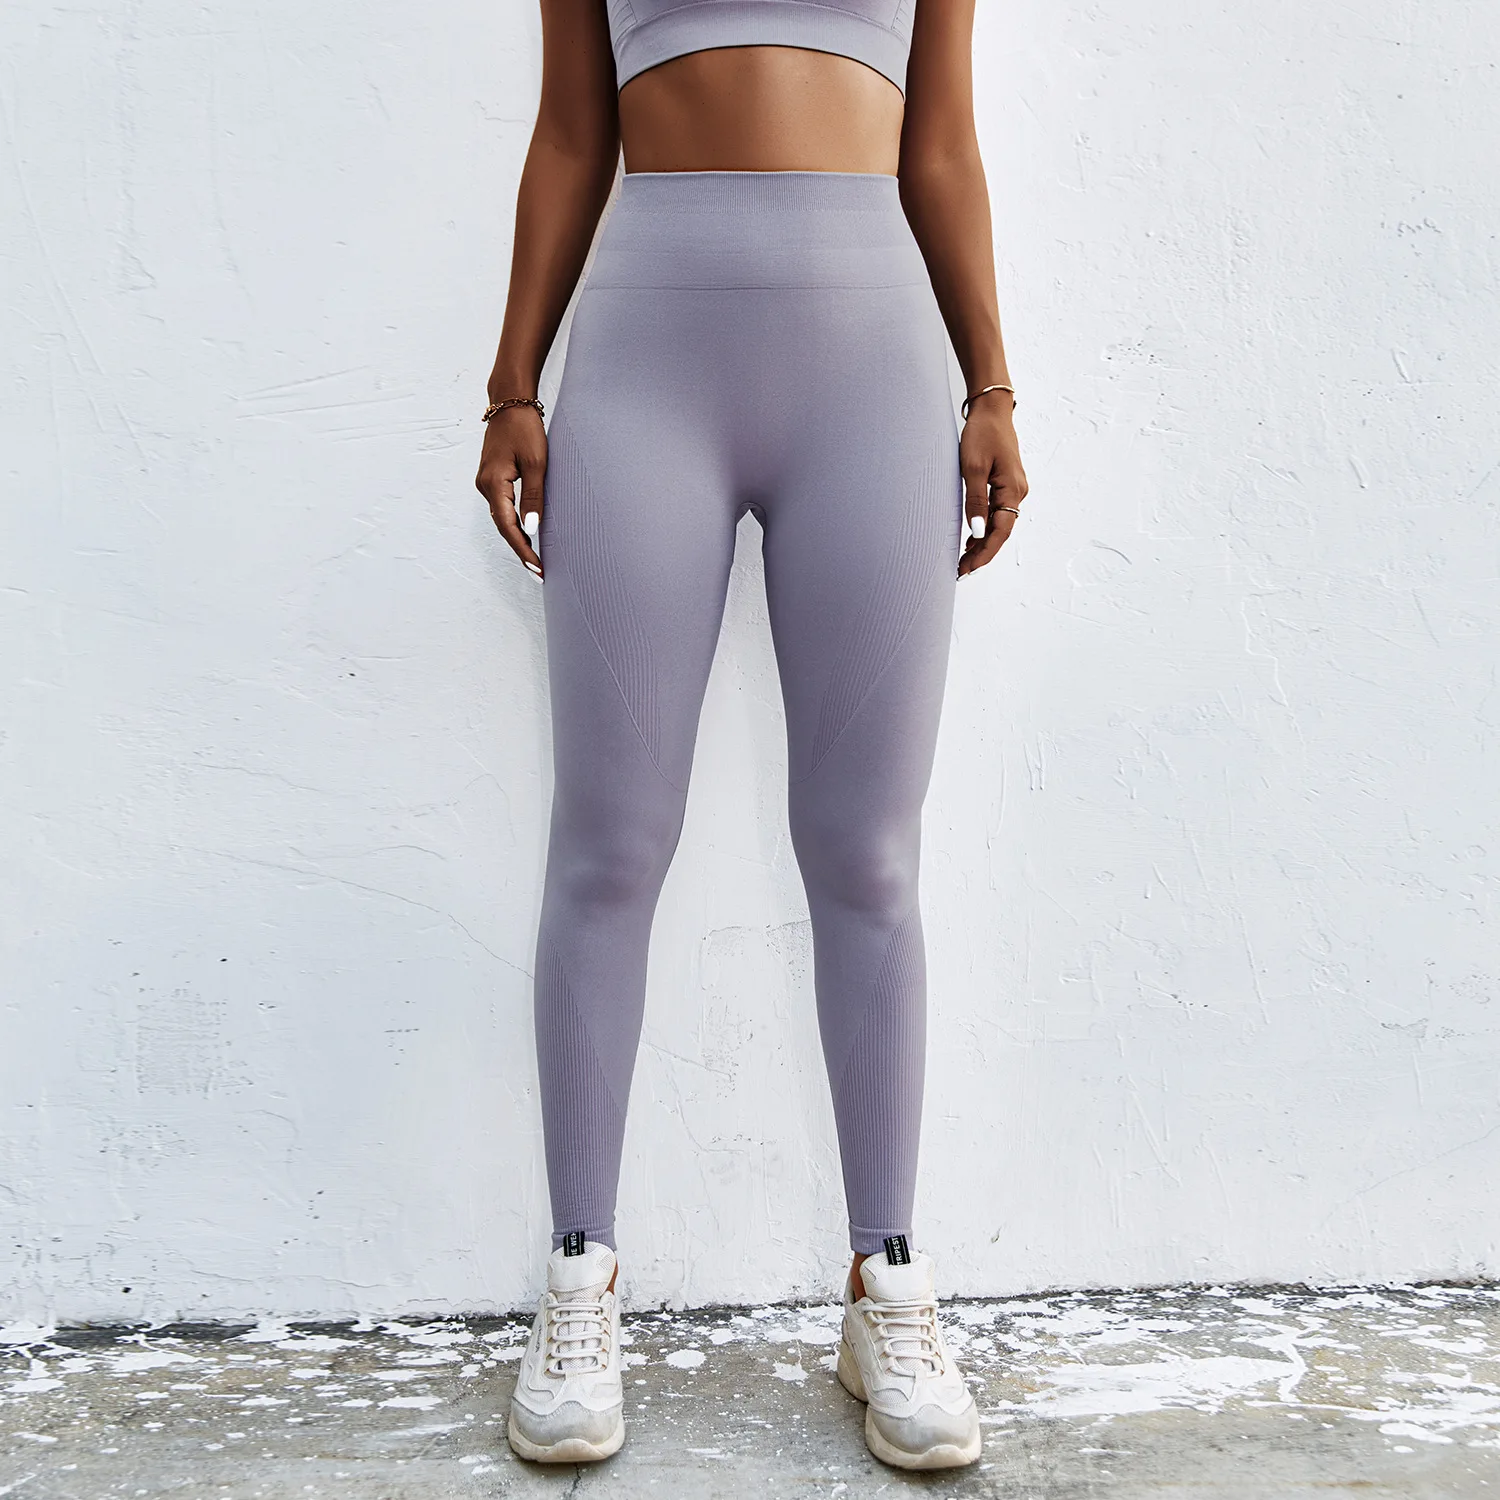 S - XL High Waist Leggings Women Seamless Yoga Pants With Pockets Push Up  Fitness Gym Running Sports Wear Streetwear A124P - AliExpress